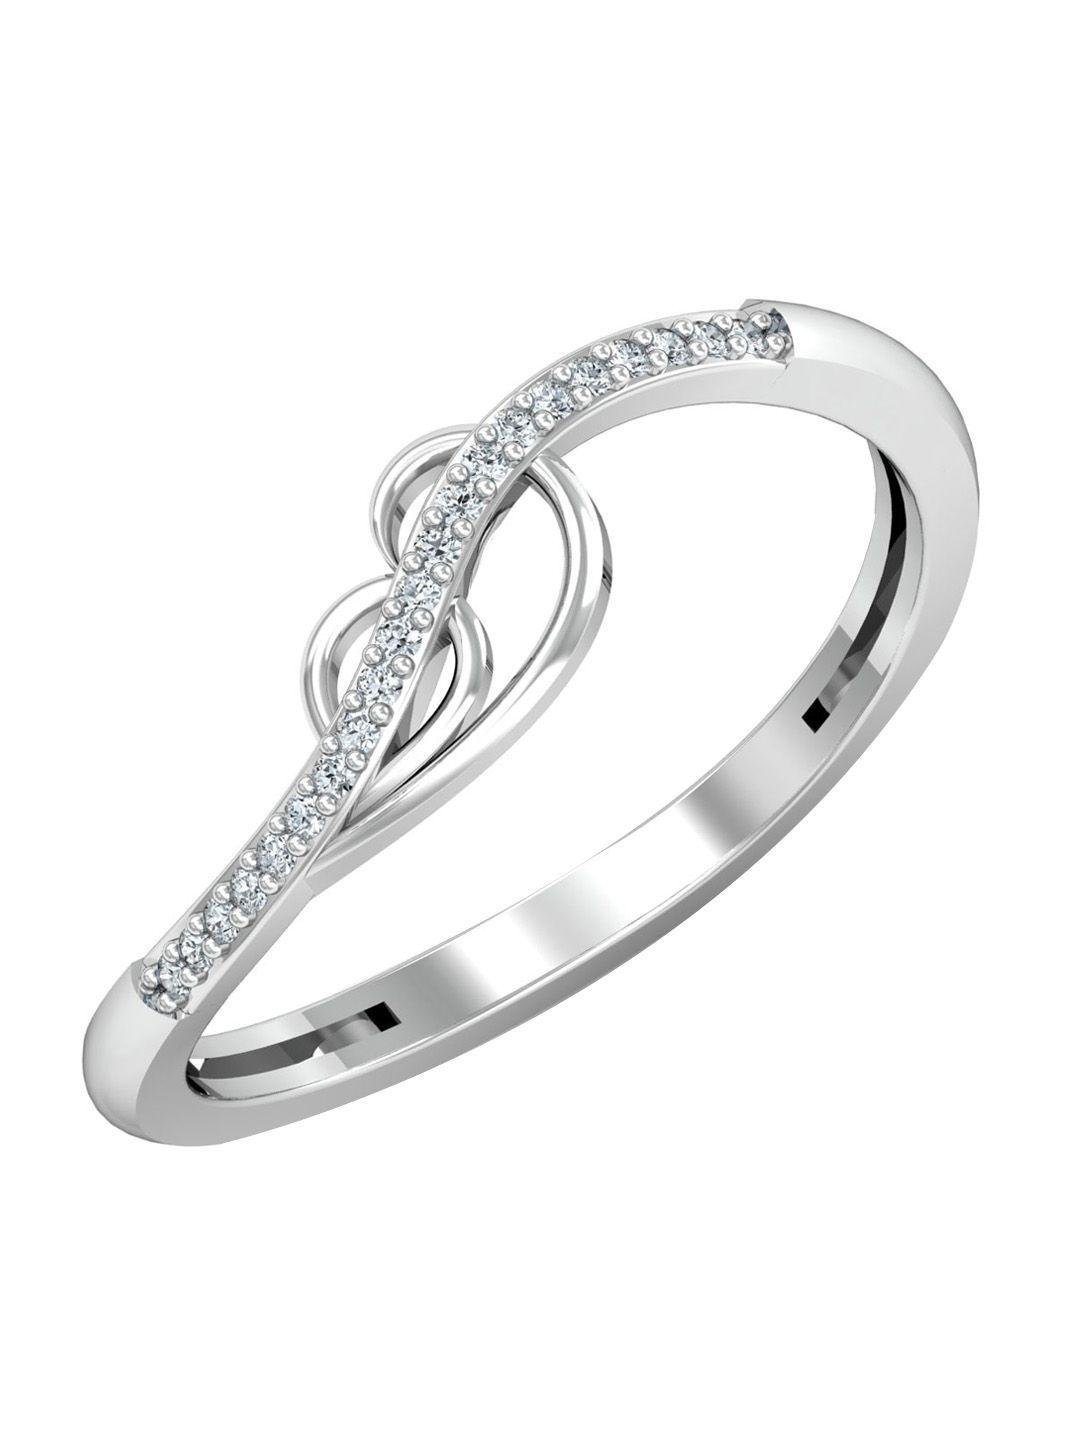 kuberbox 18kt white gold diamond studded ring-1.53gm